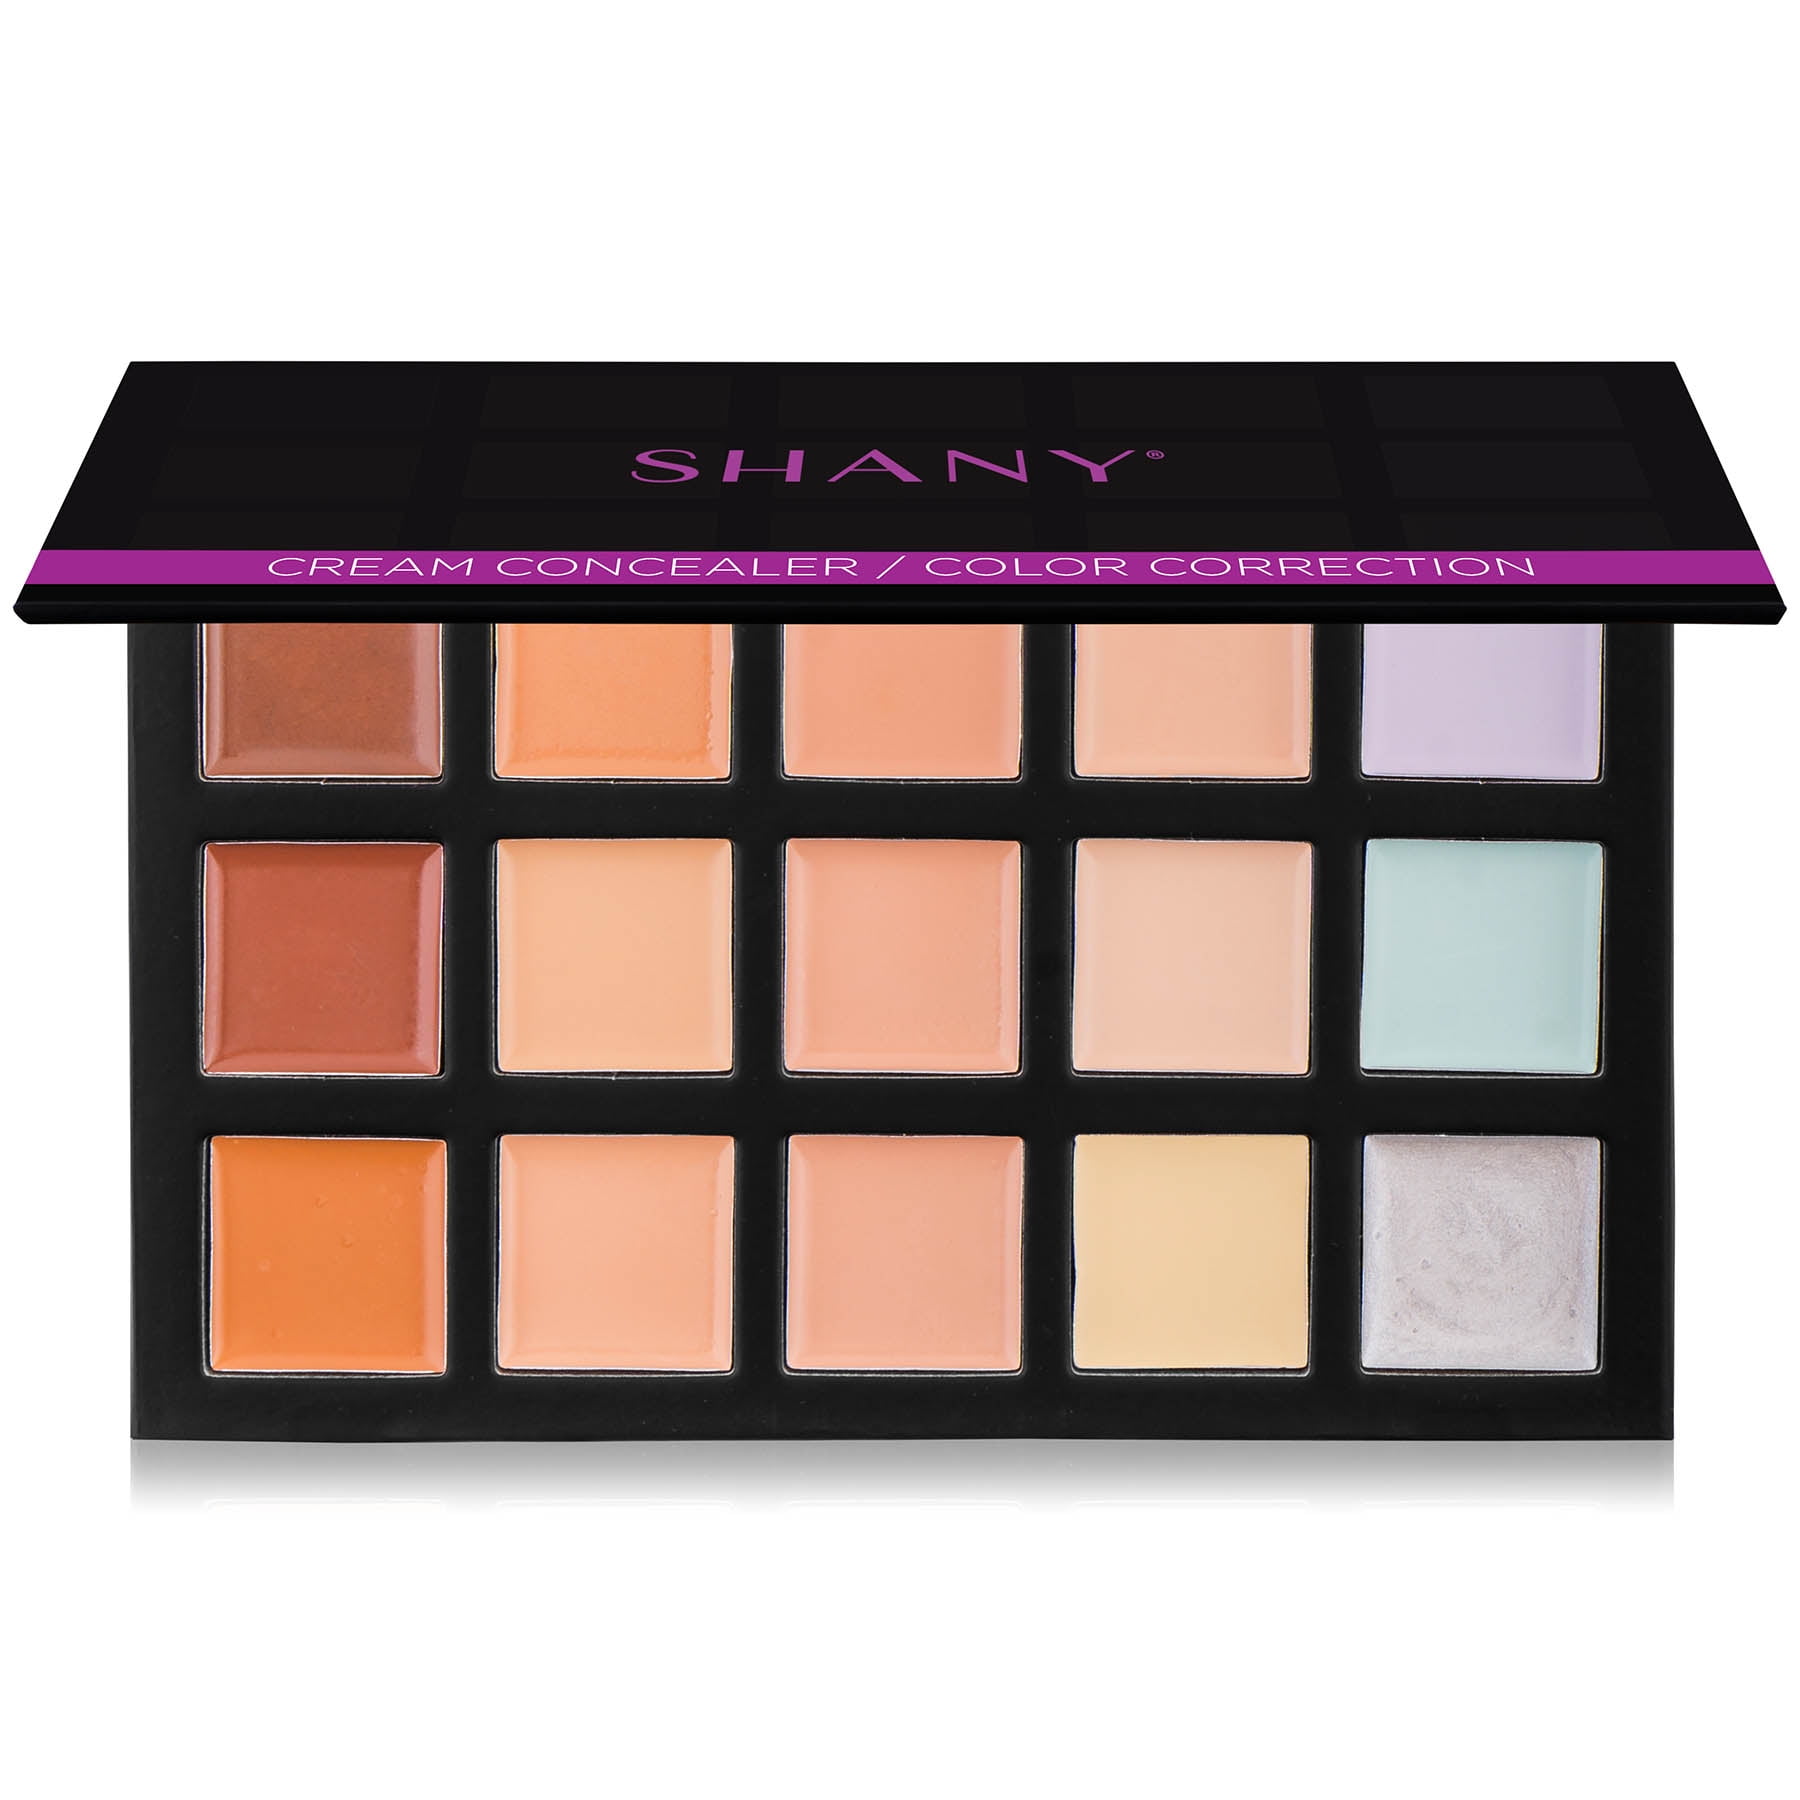 Shany 4-Layer Contour/Highlight Makeup Set - Palette Refills - Concealer